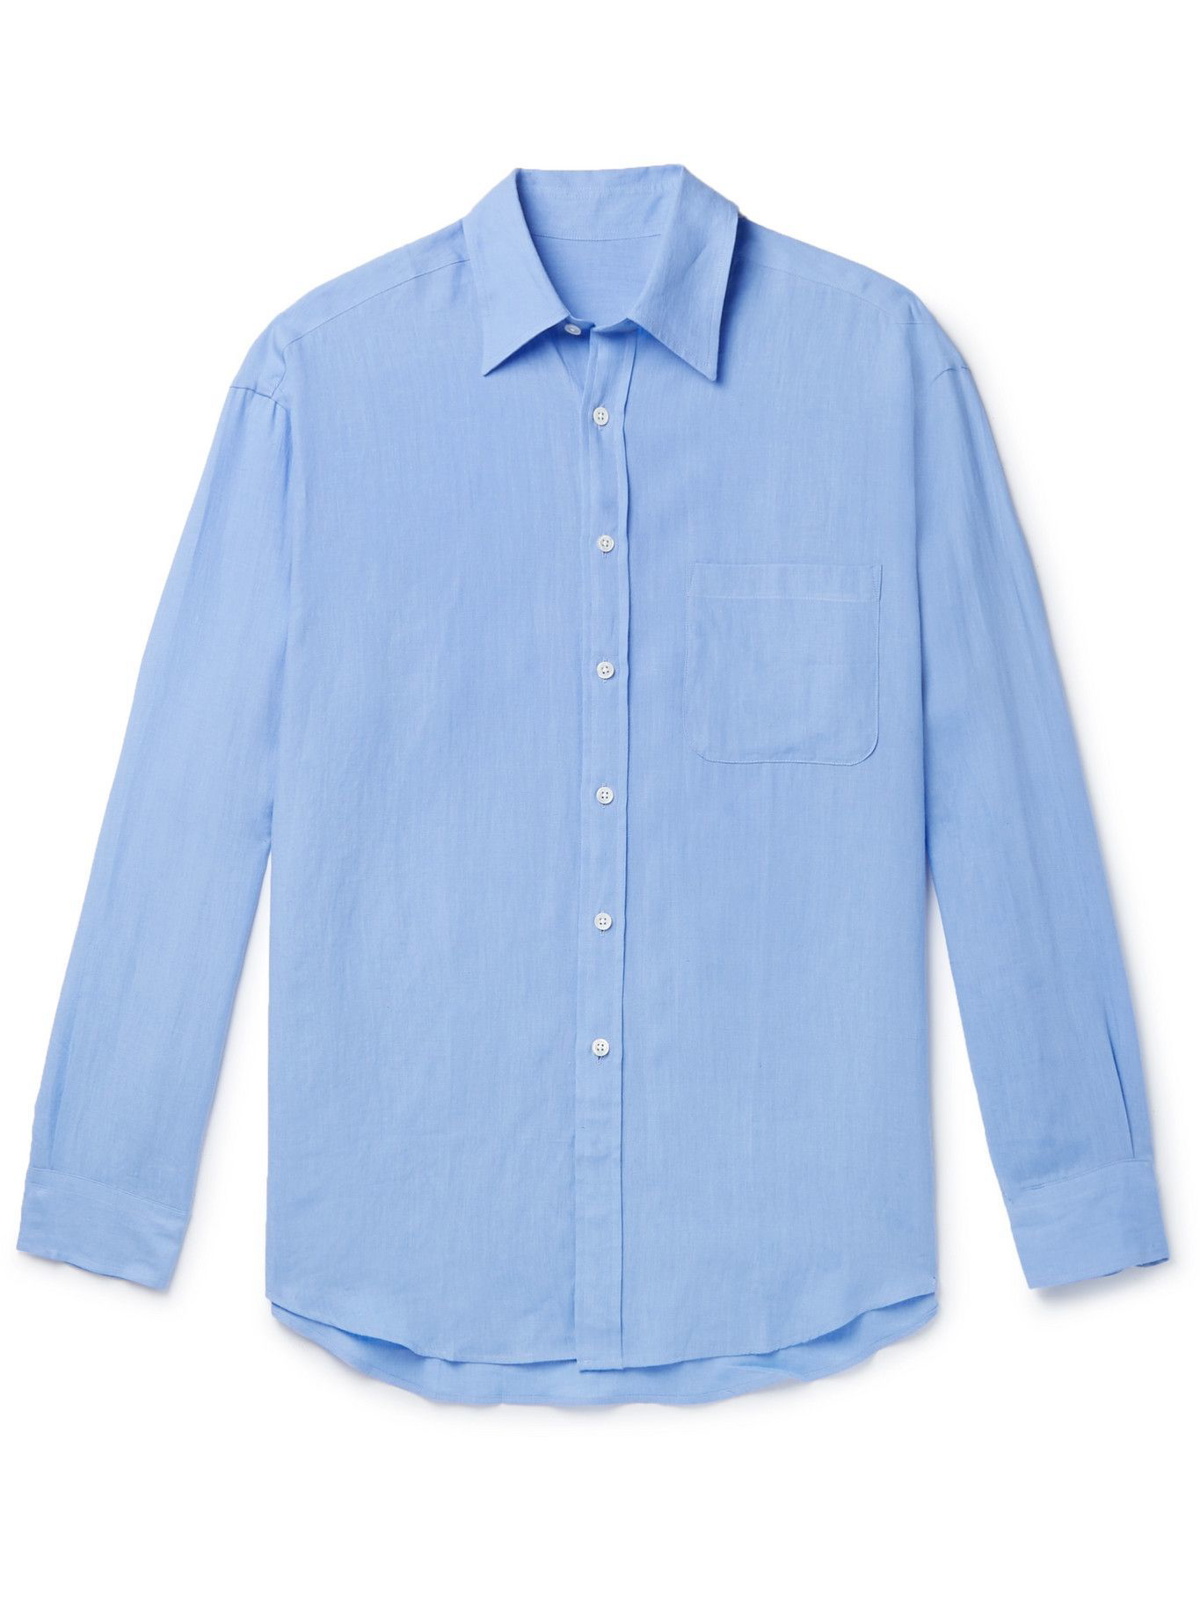 ANDERSON & SHEPPARD - Linen Shirt - Blue Anderson & Sheppard